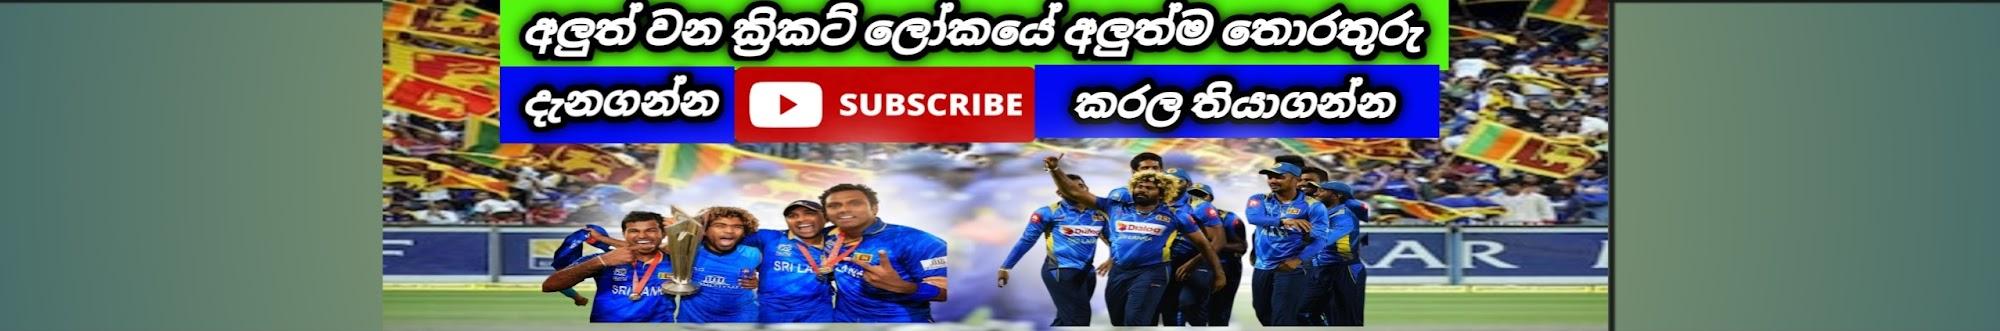 Sri Lanka Cricket Council 